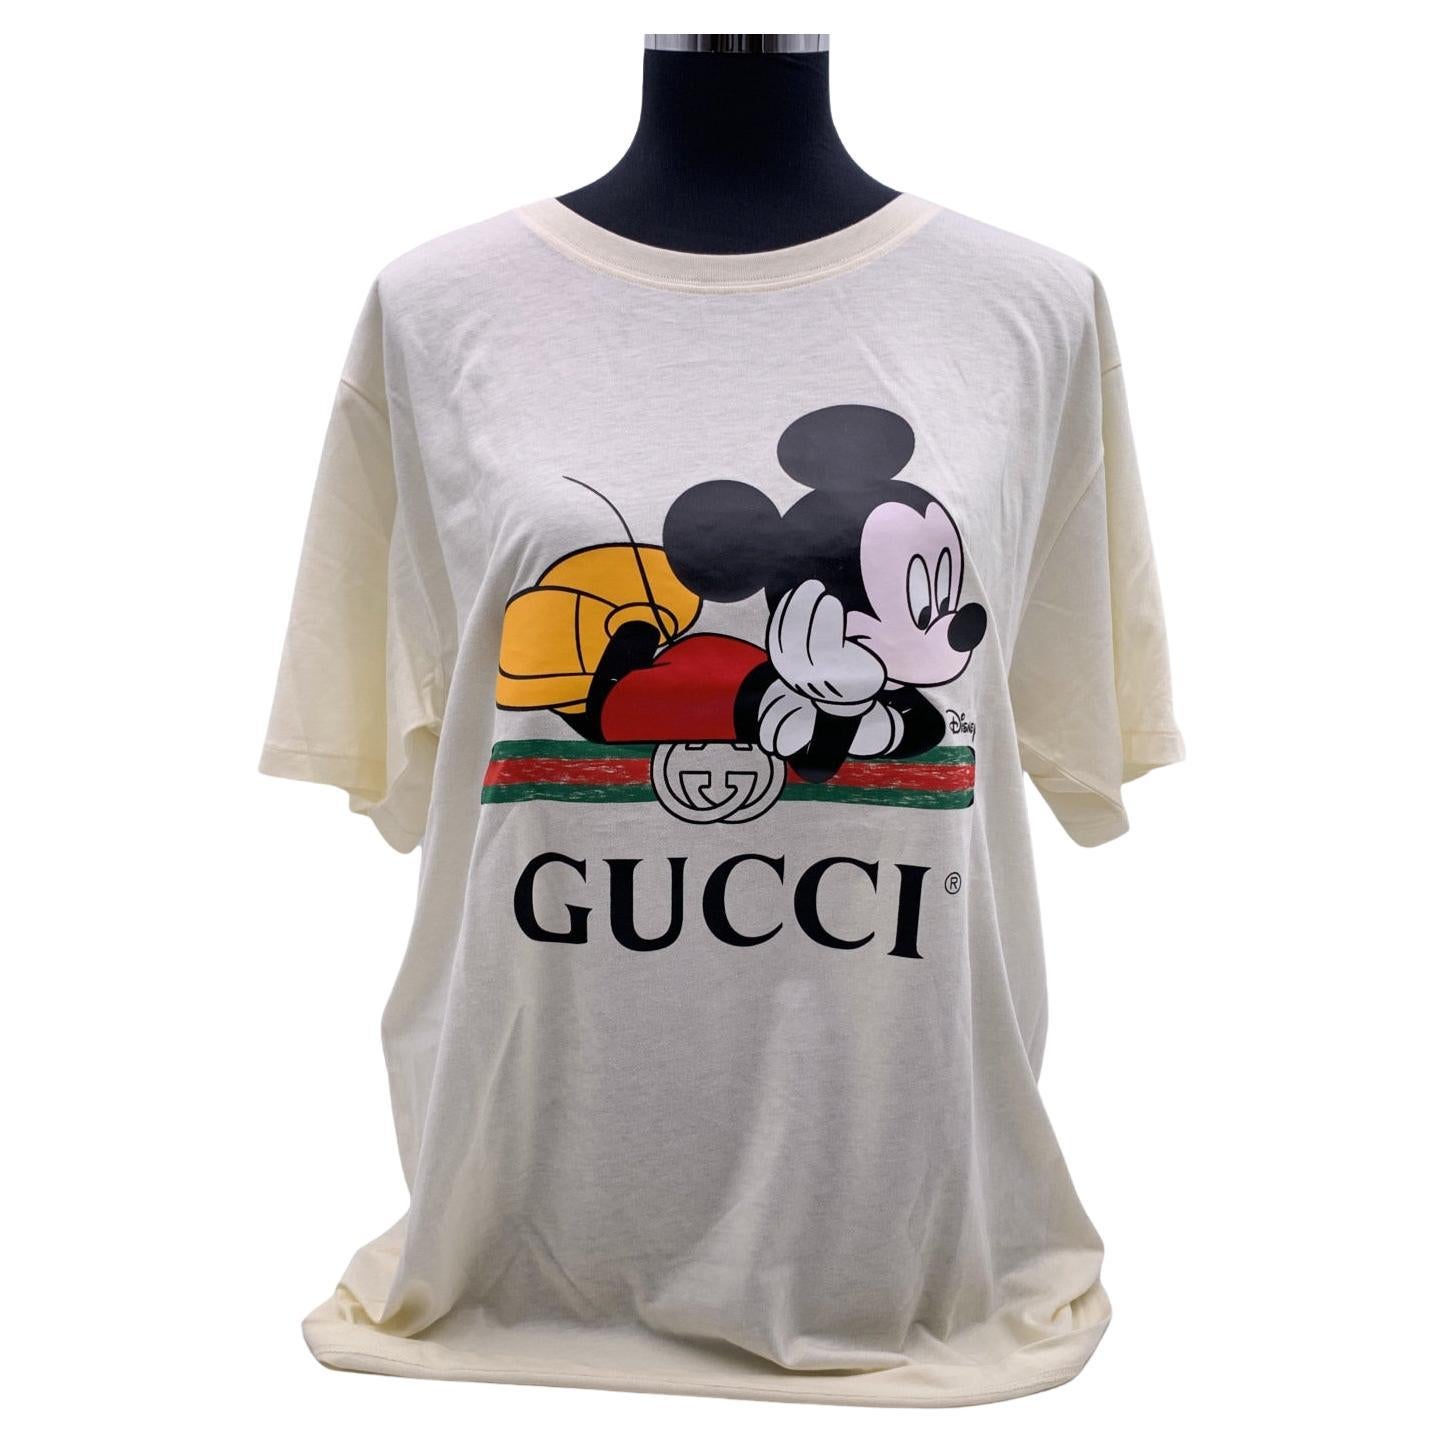 Gucci x Disney Mickey Mouse White Cotton Unisex T Shirt Size L